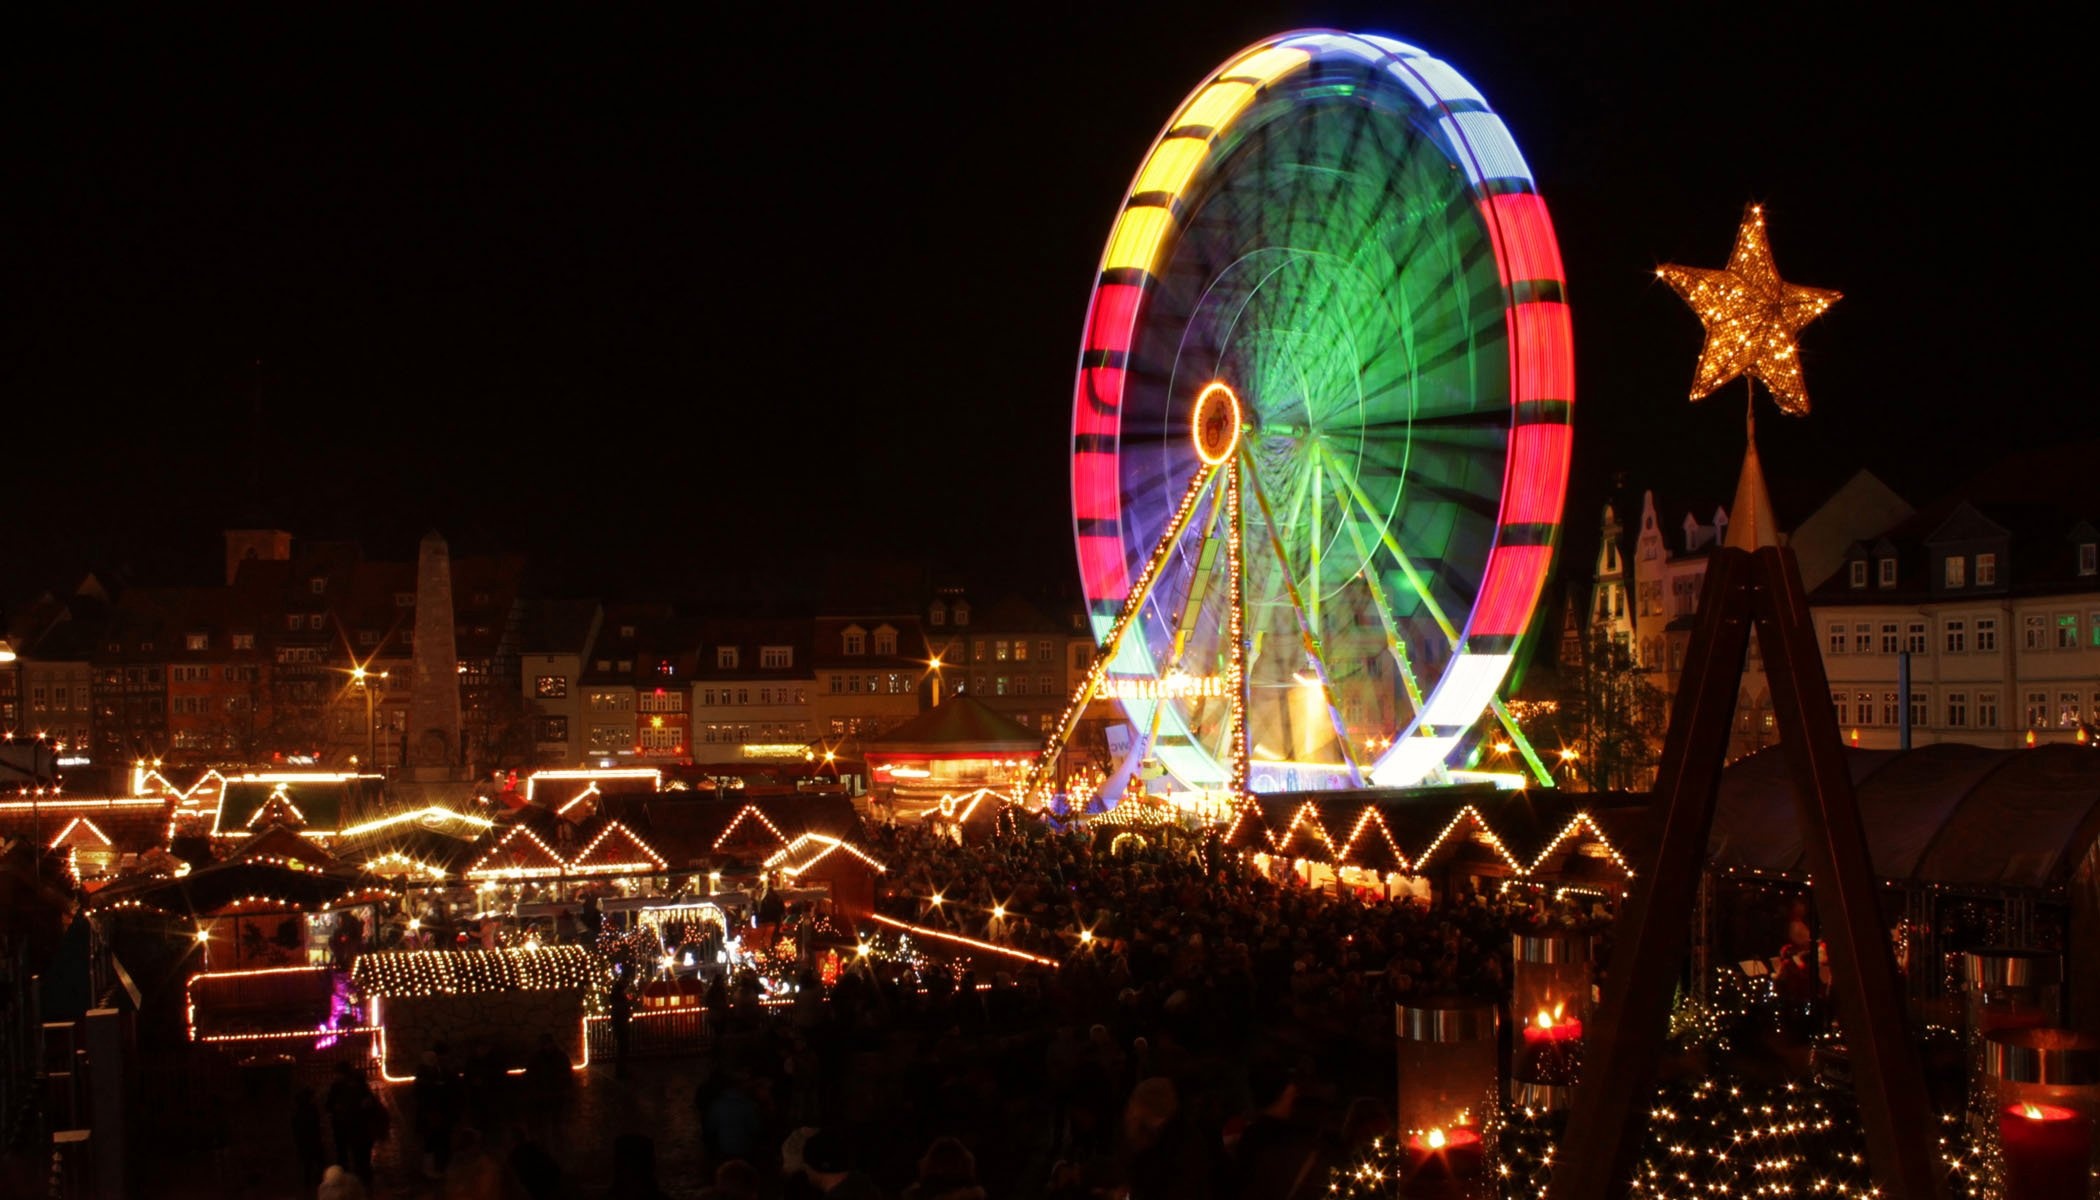 Fun Fair: Ferris wheel, Attractions, Amusement ride, Festival, Entertainment, Recreation. 2100x1200 HD Wallpaper.